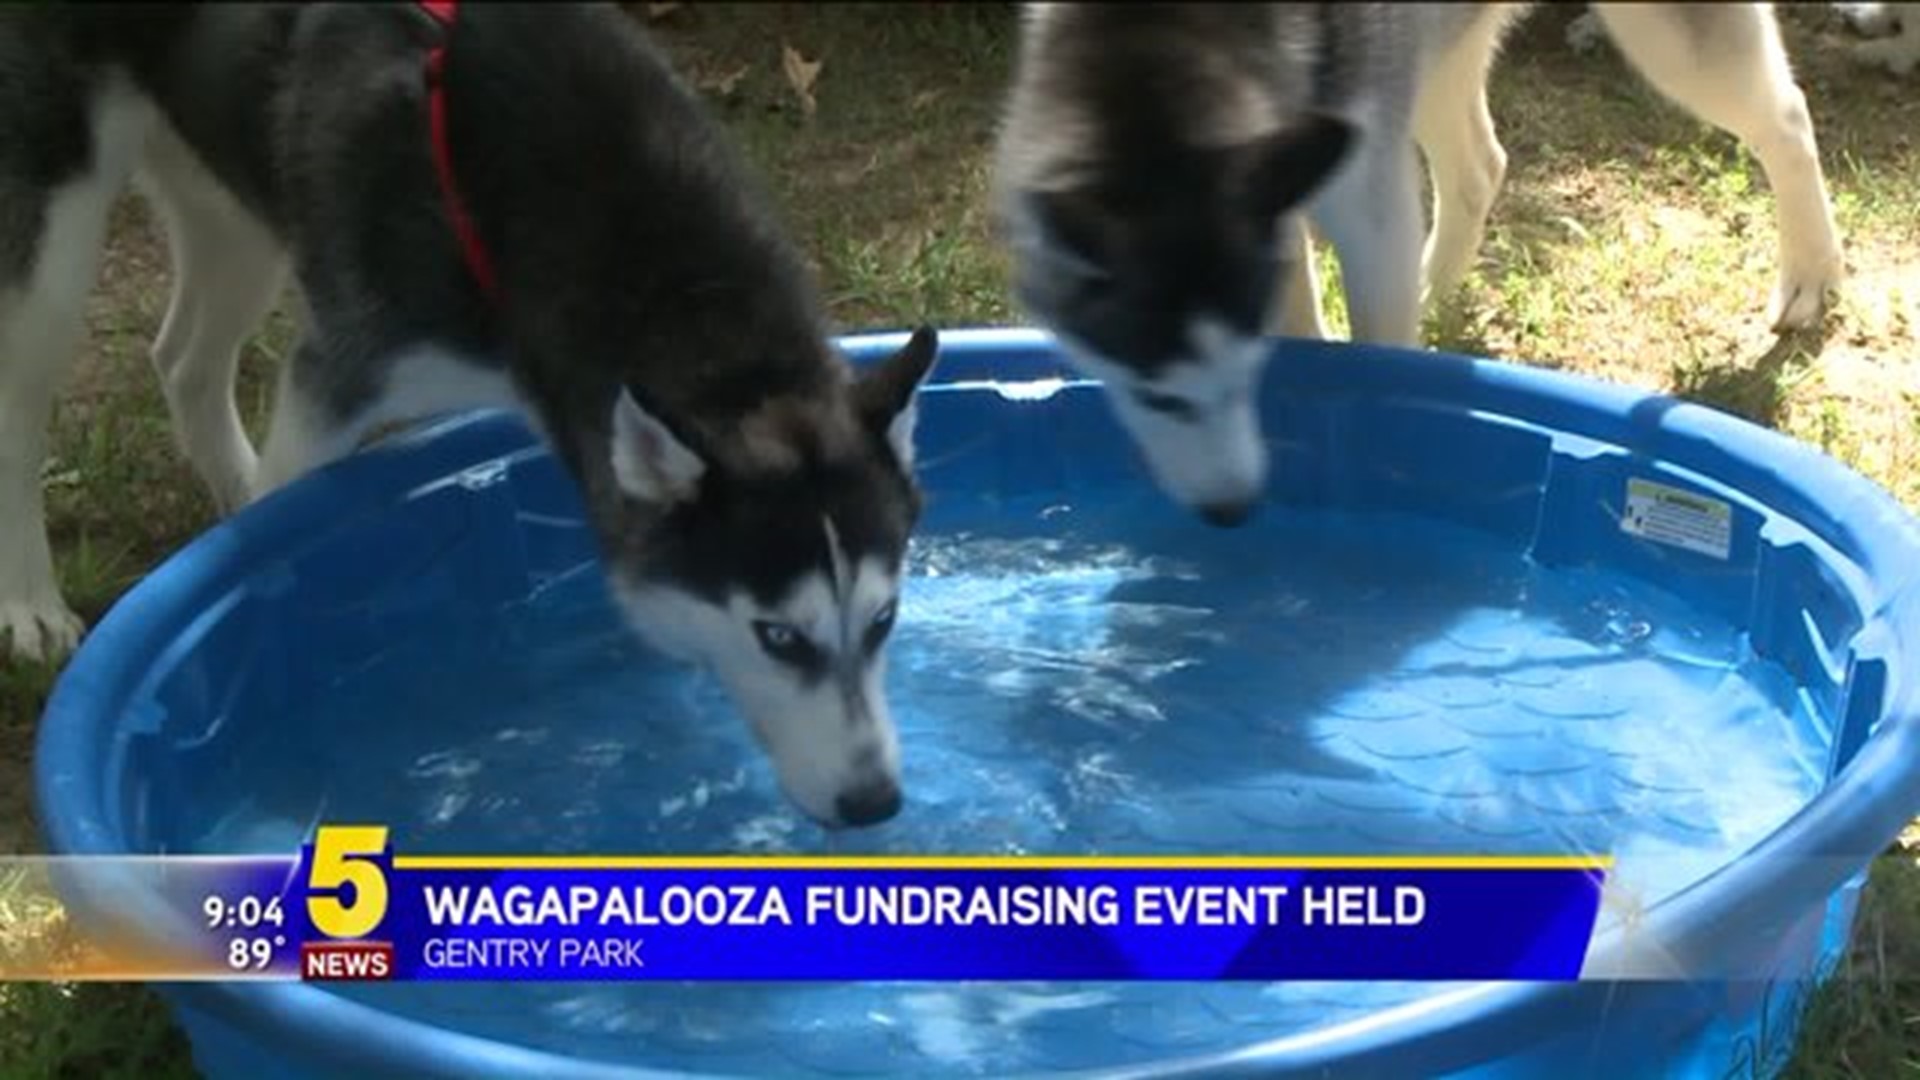 Wagapalooza Fundraising Event